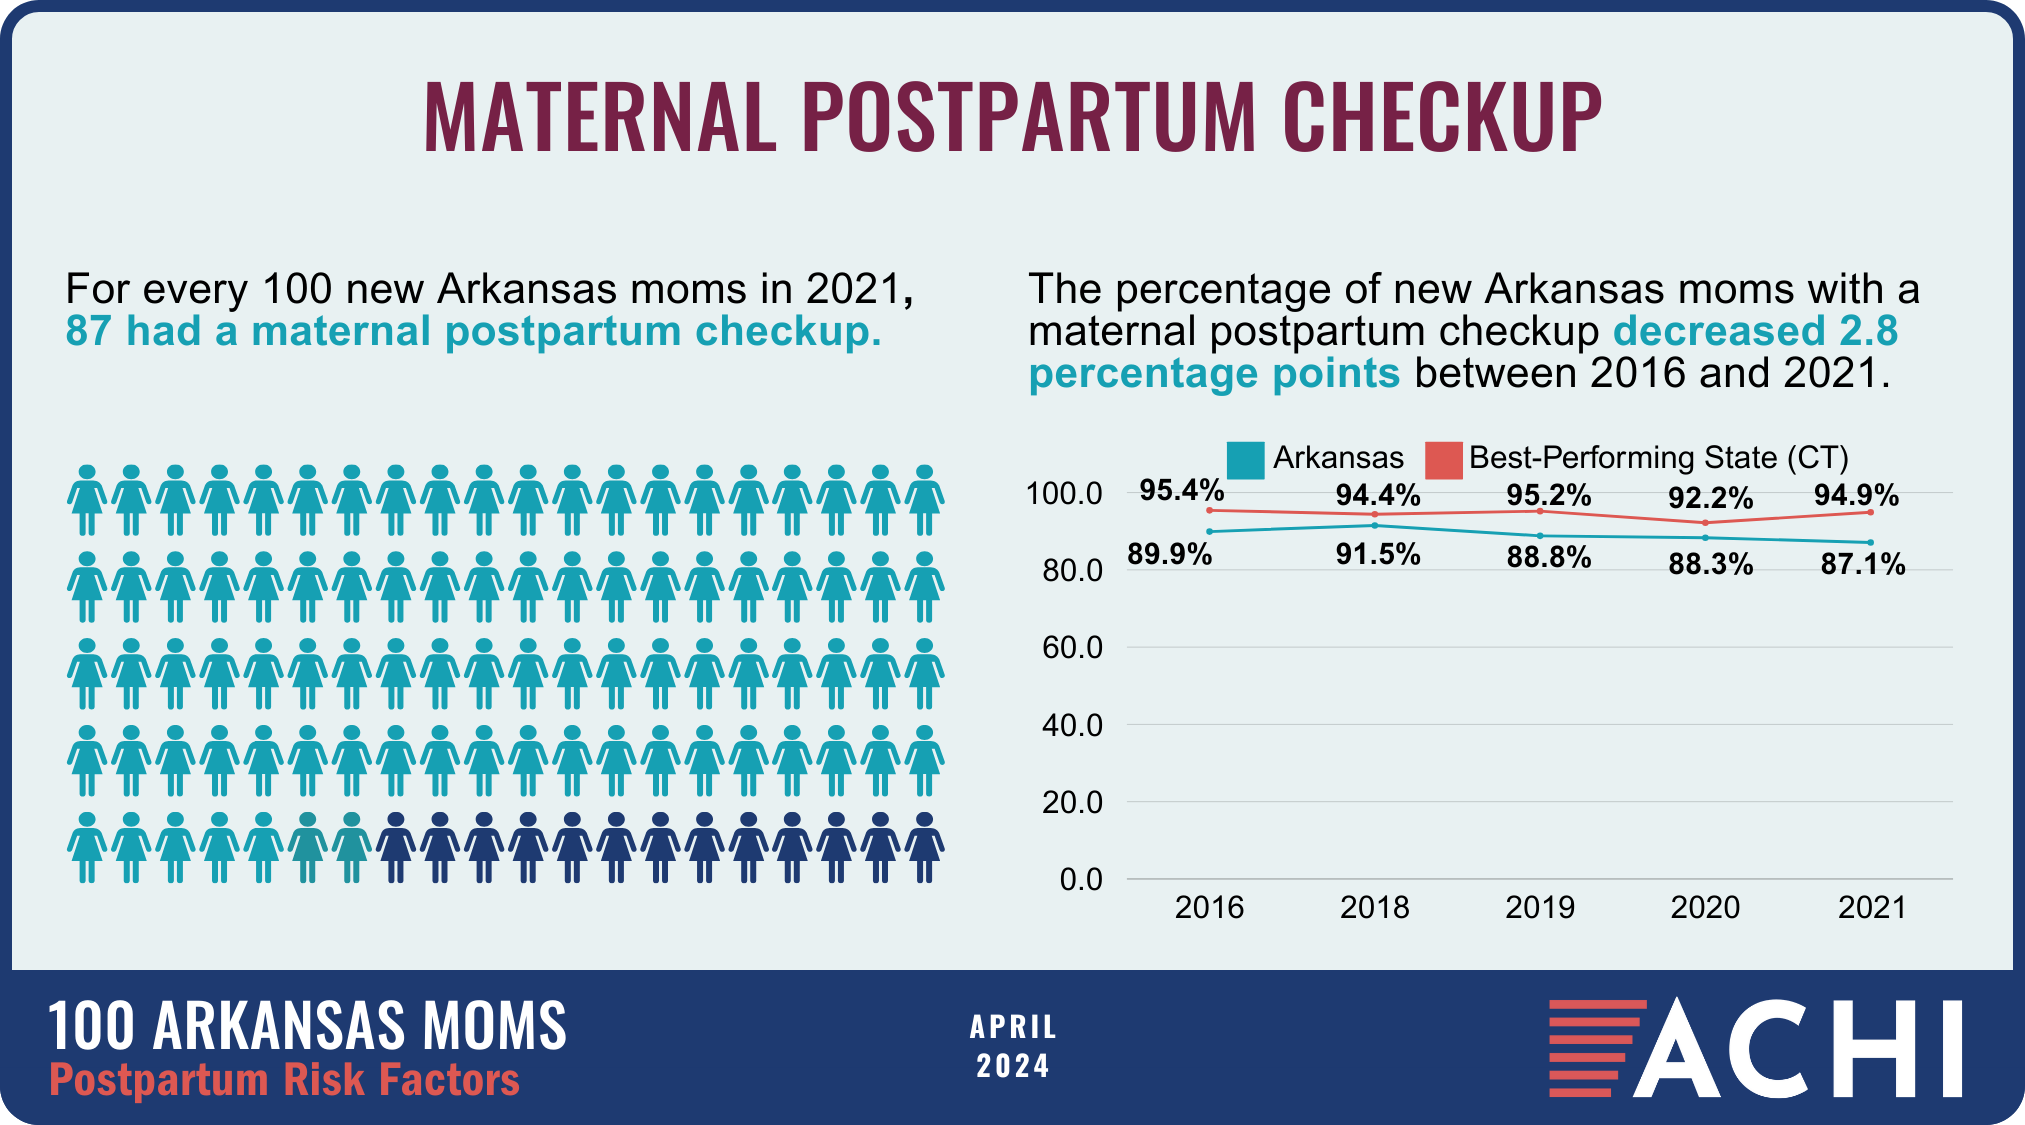 20_240418_100 Arkansas Moms_Postpartum Risk Factors_Postpartum Checkup